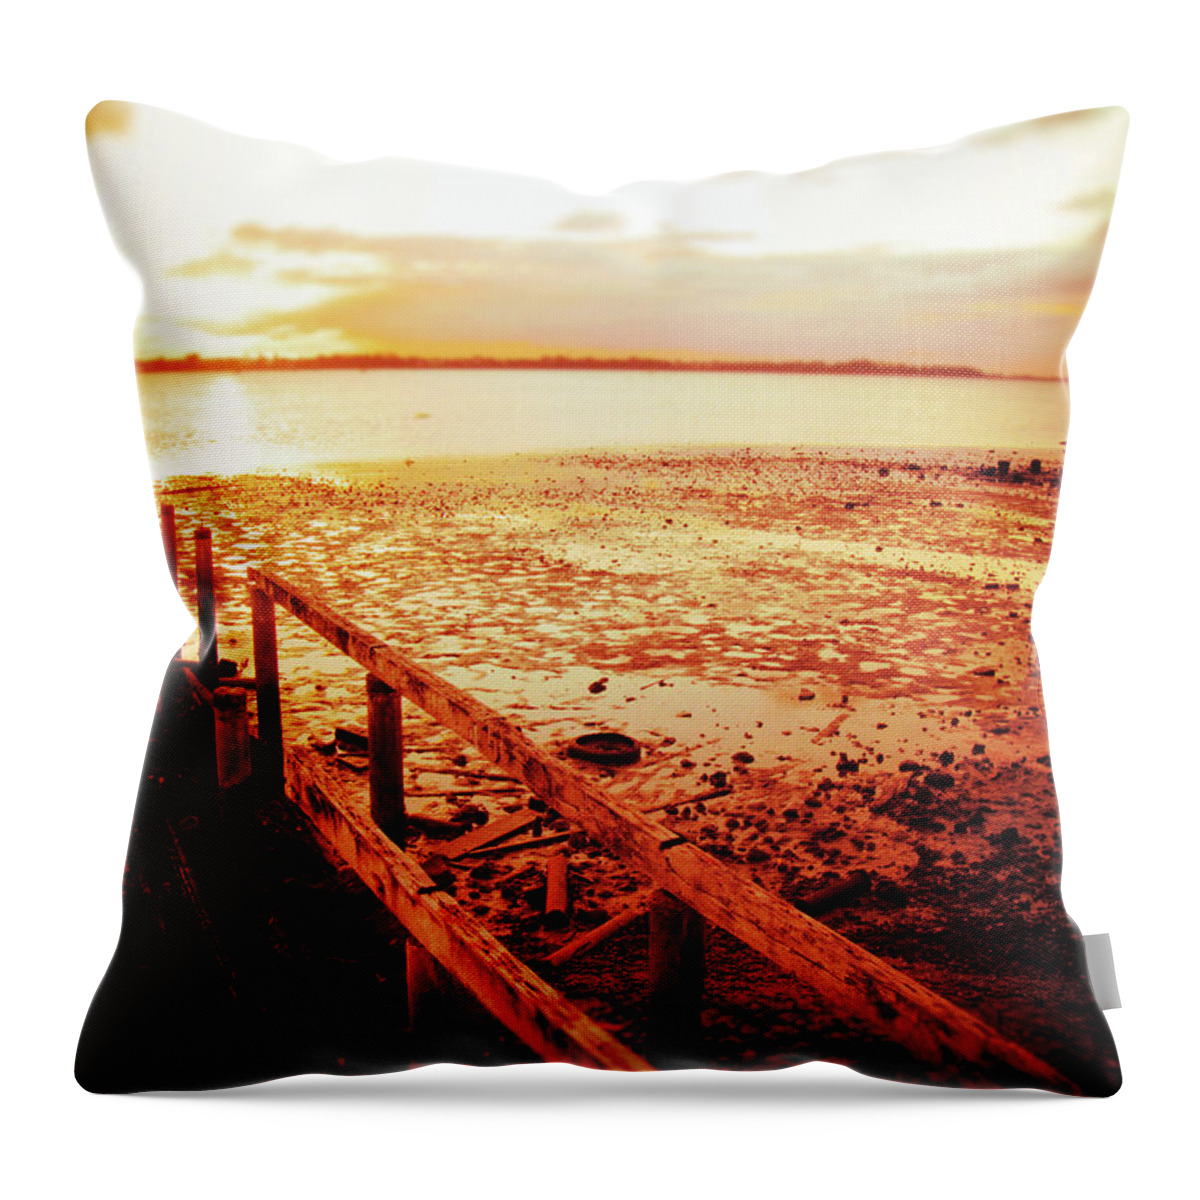 Landscape Throw Pillow featuring the photograph Beach Structure Haze by Michael Blaine